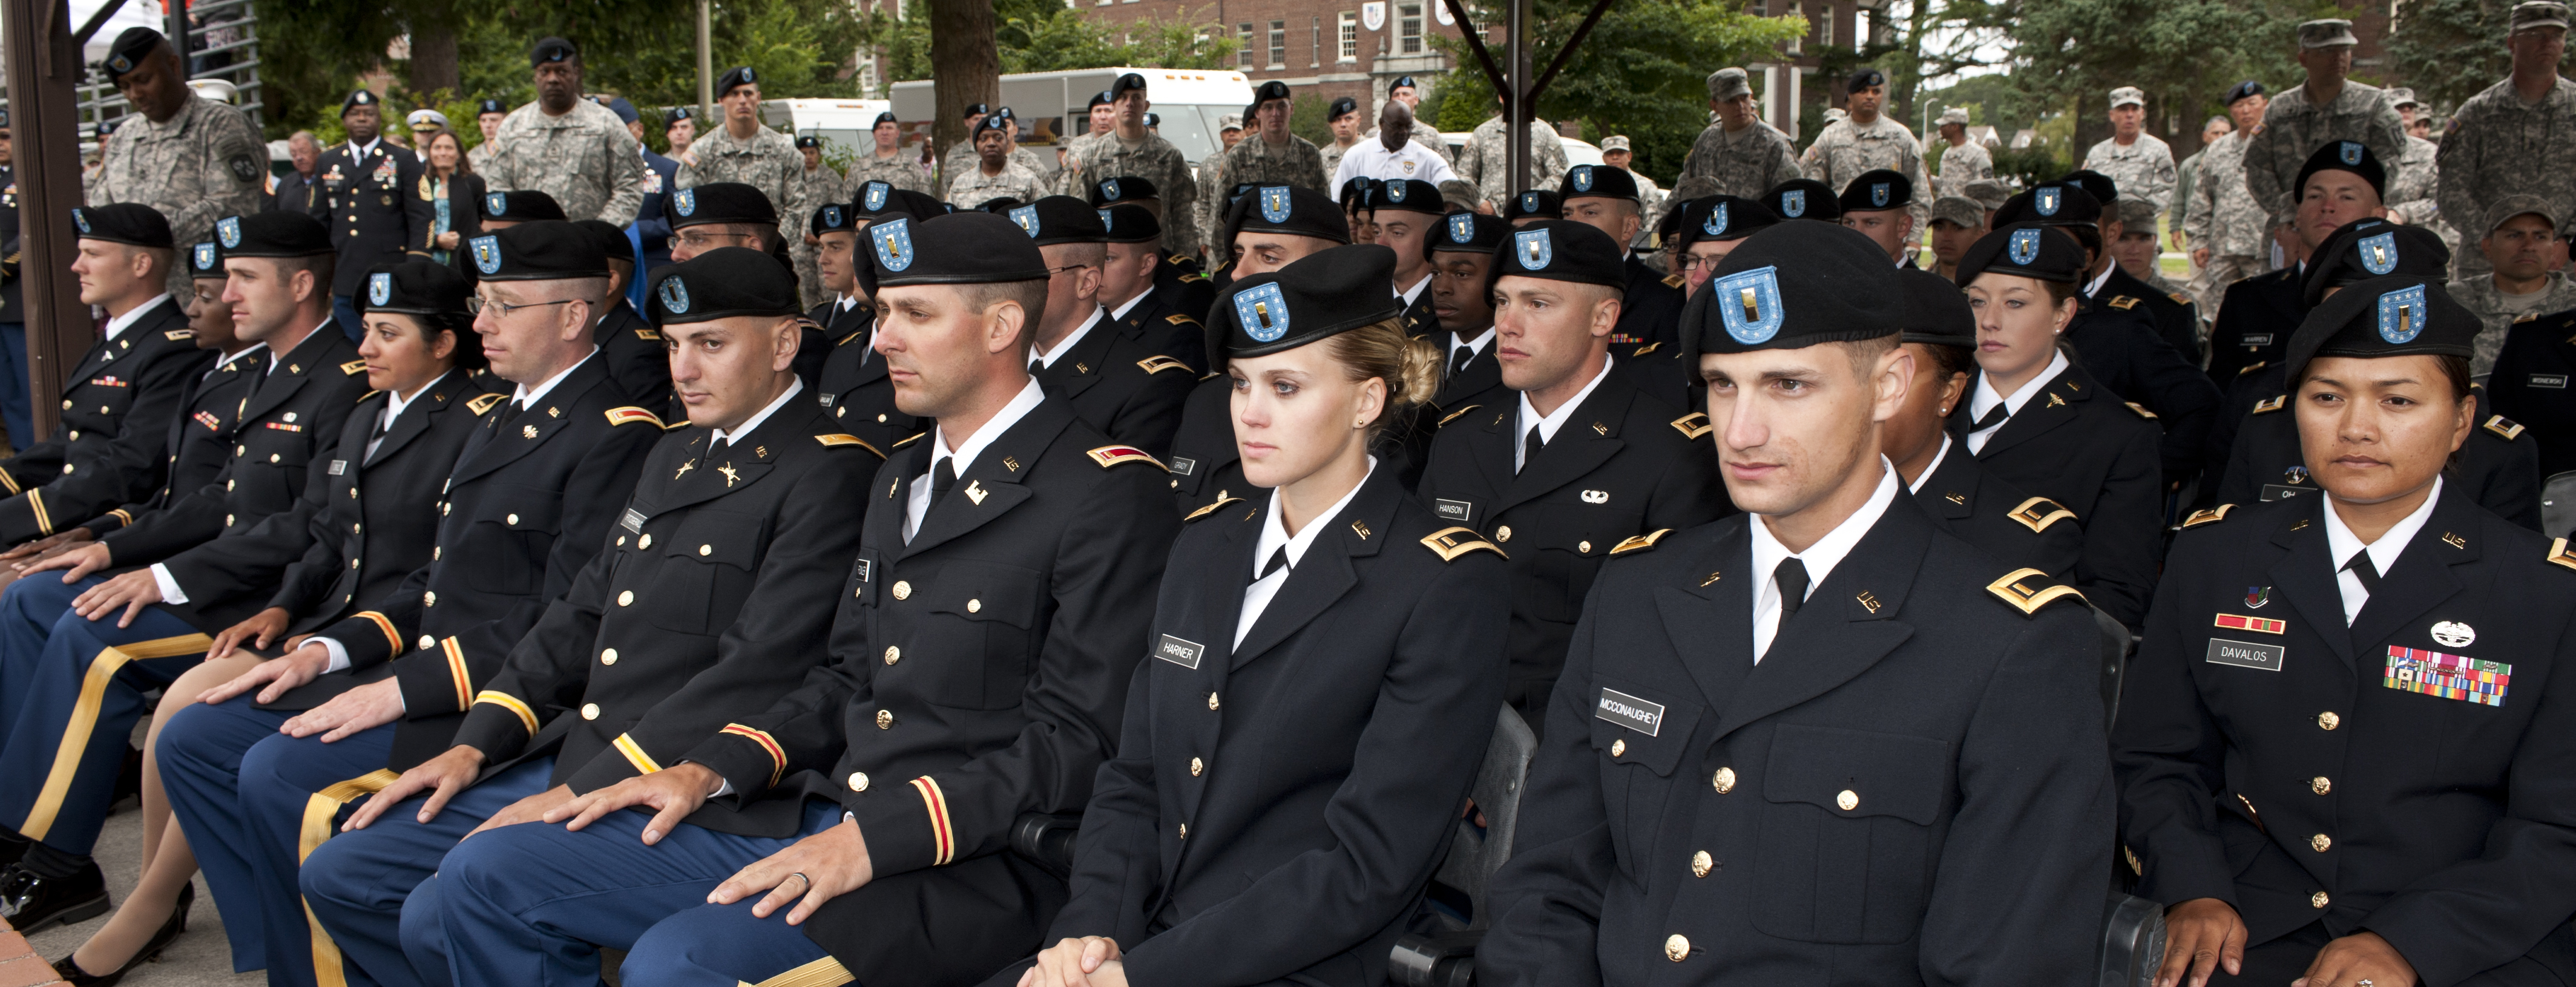 Army Graduation Pictures U.S. Army photo by Gary Tarleton.